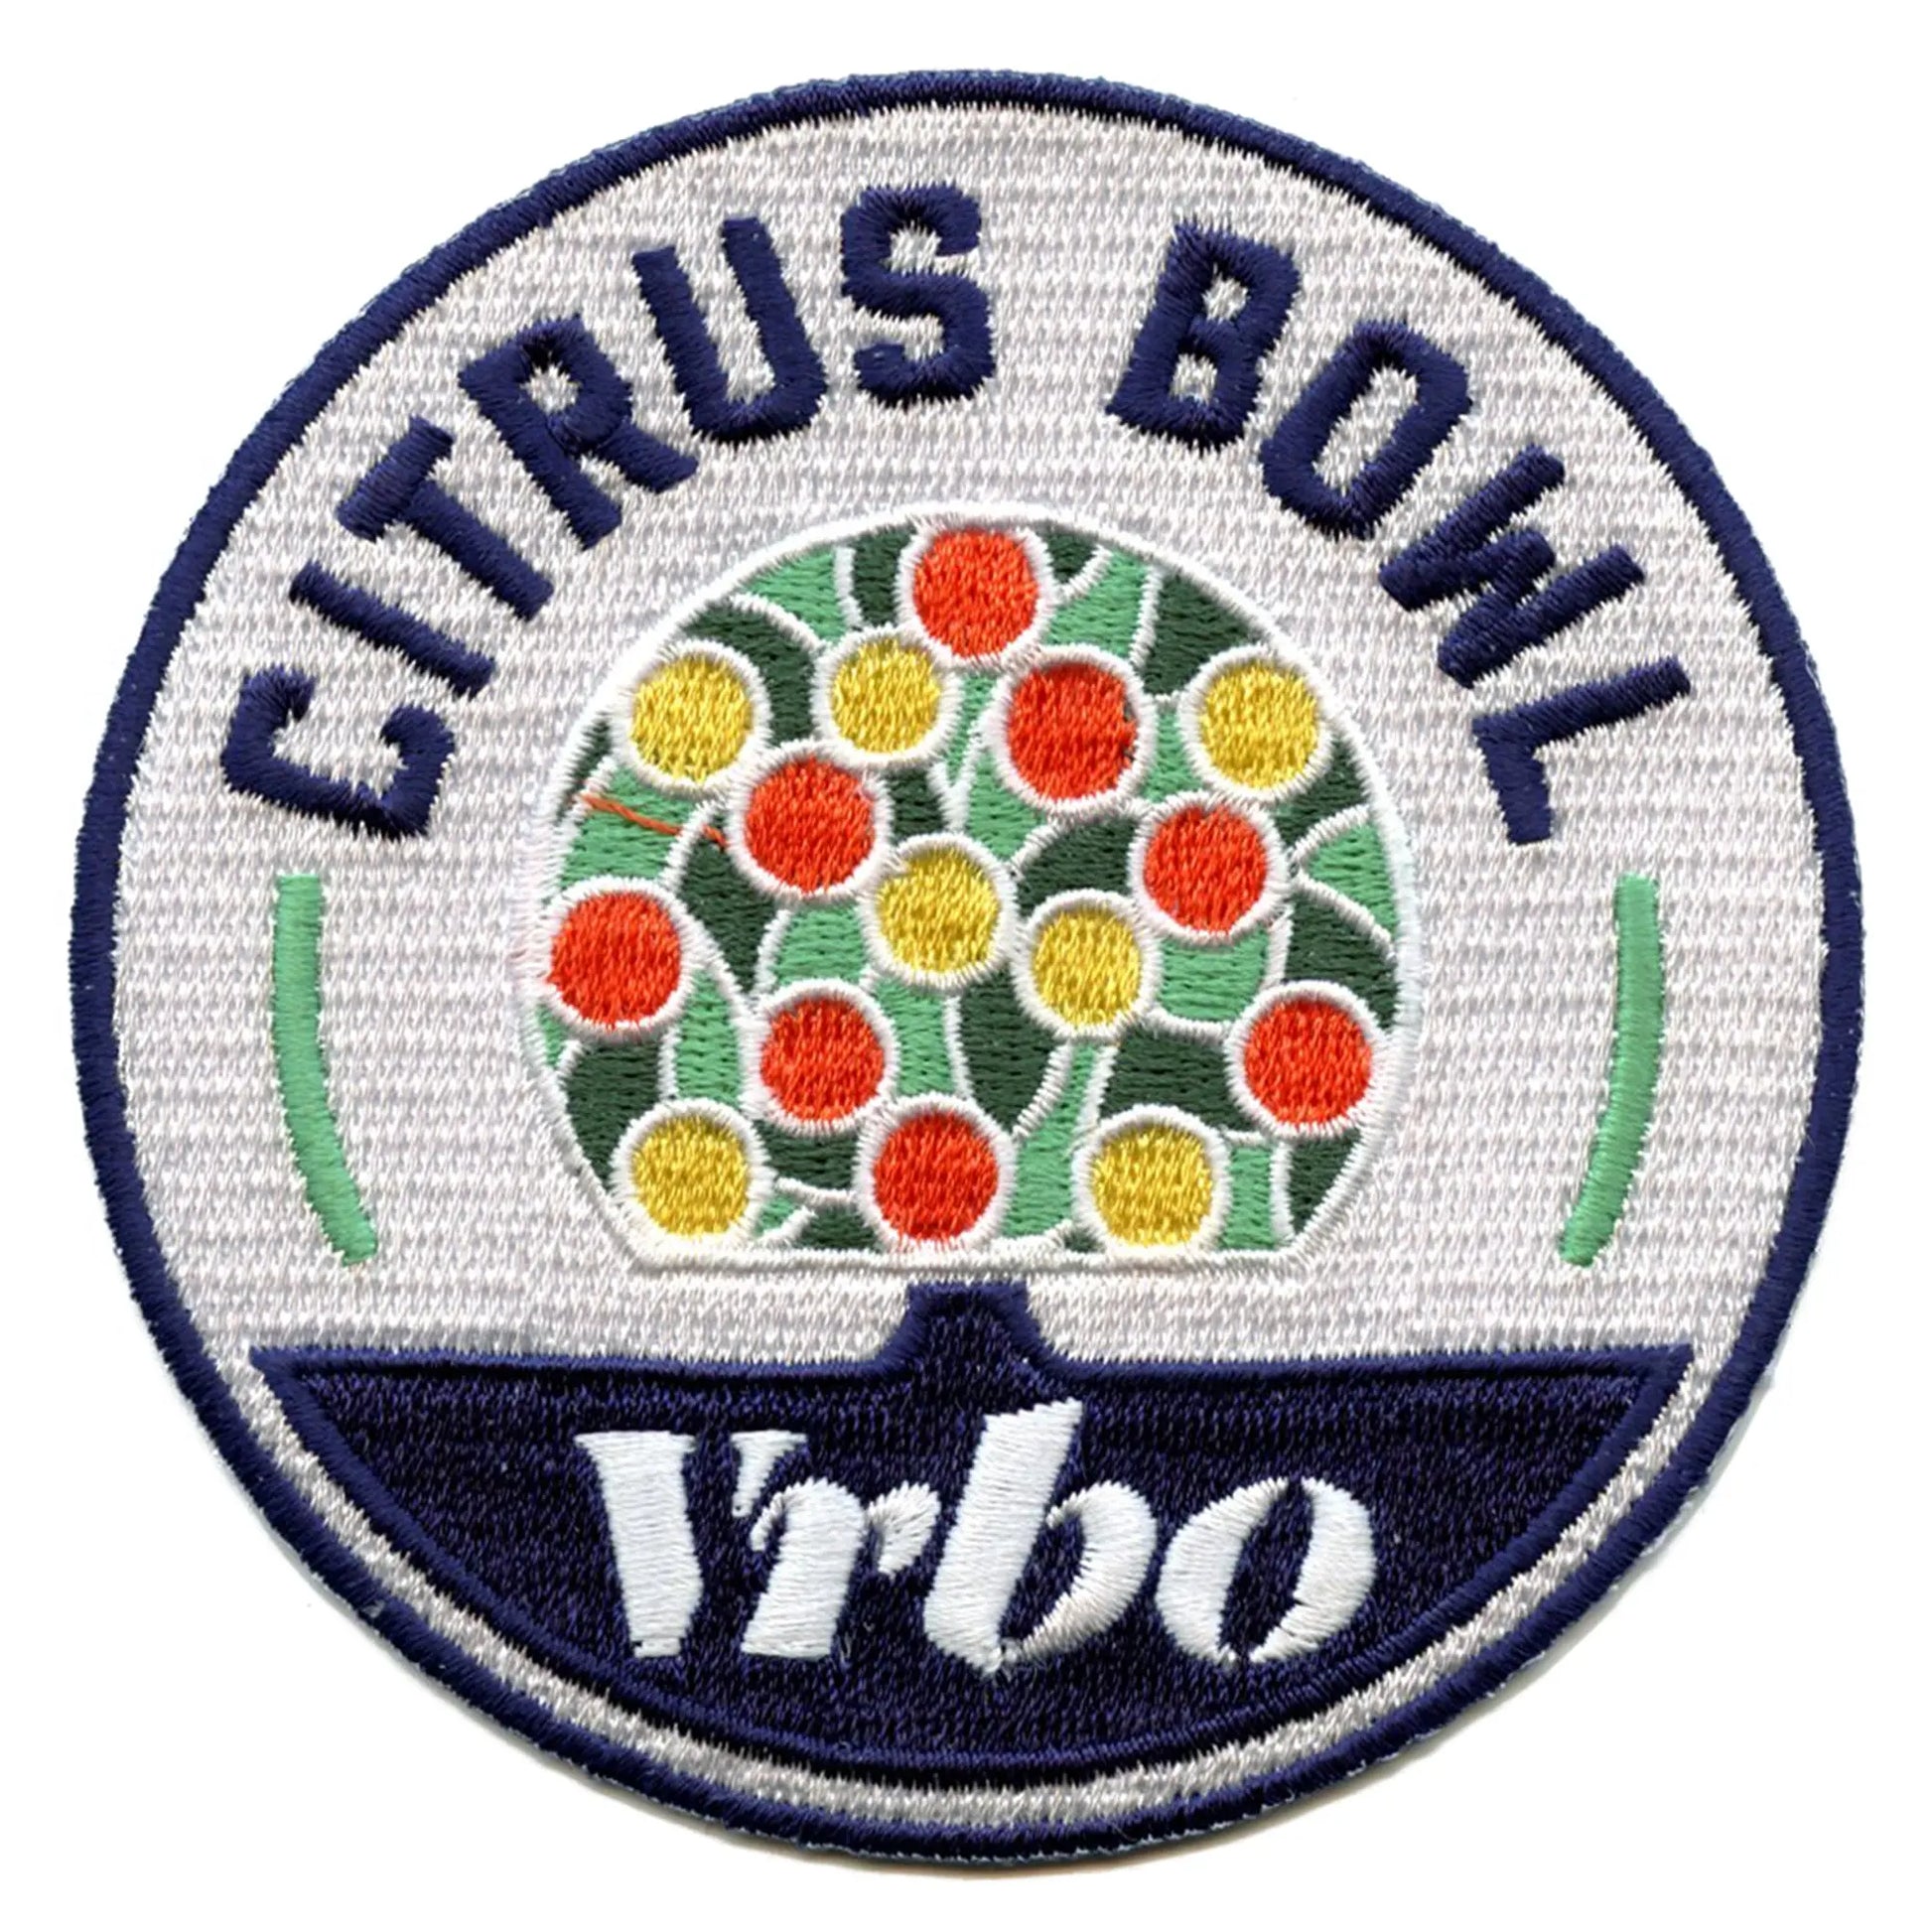 Citrus Bowl By VRBO Jersey Patch 2020 Alabama Crimson Tide Michigan Wolverines